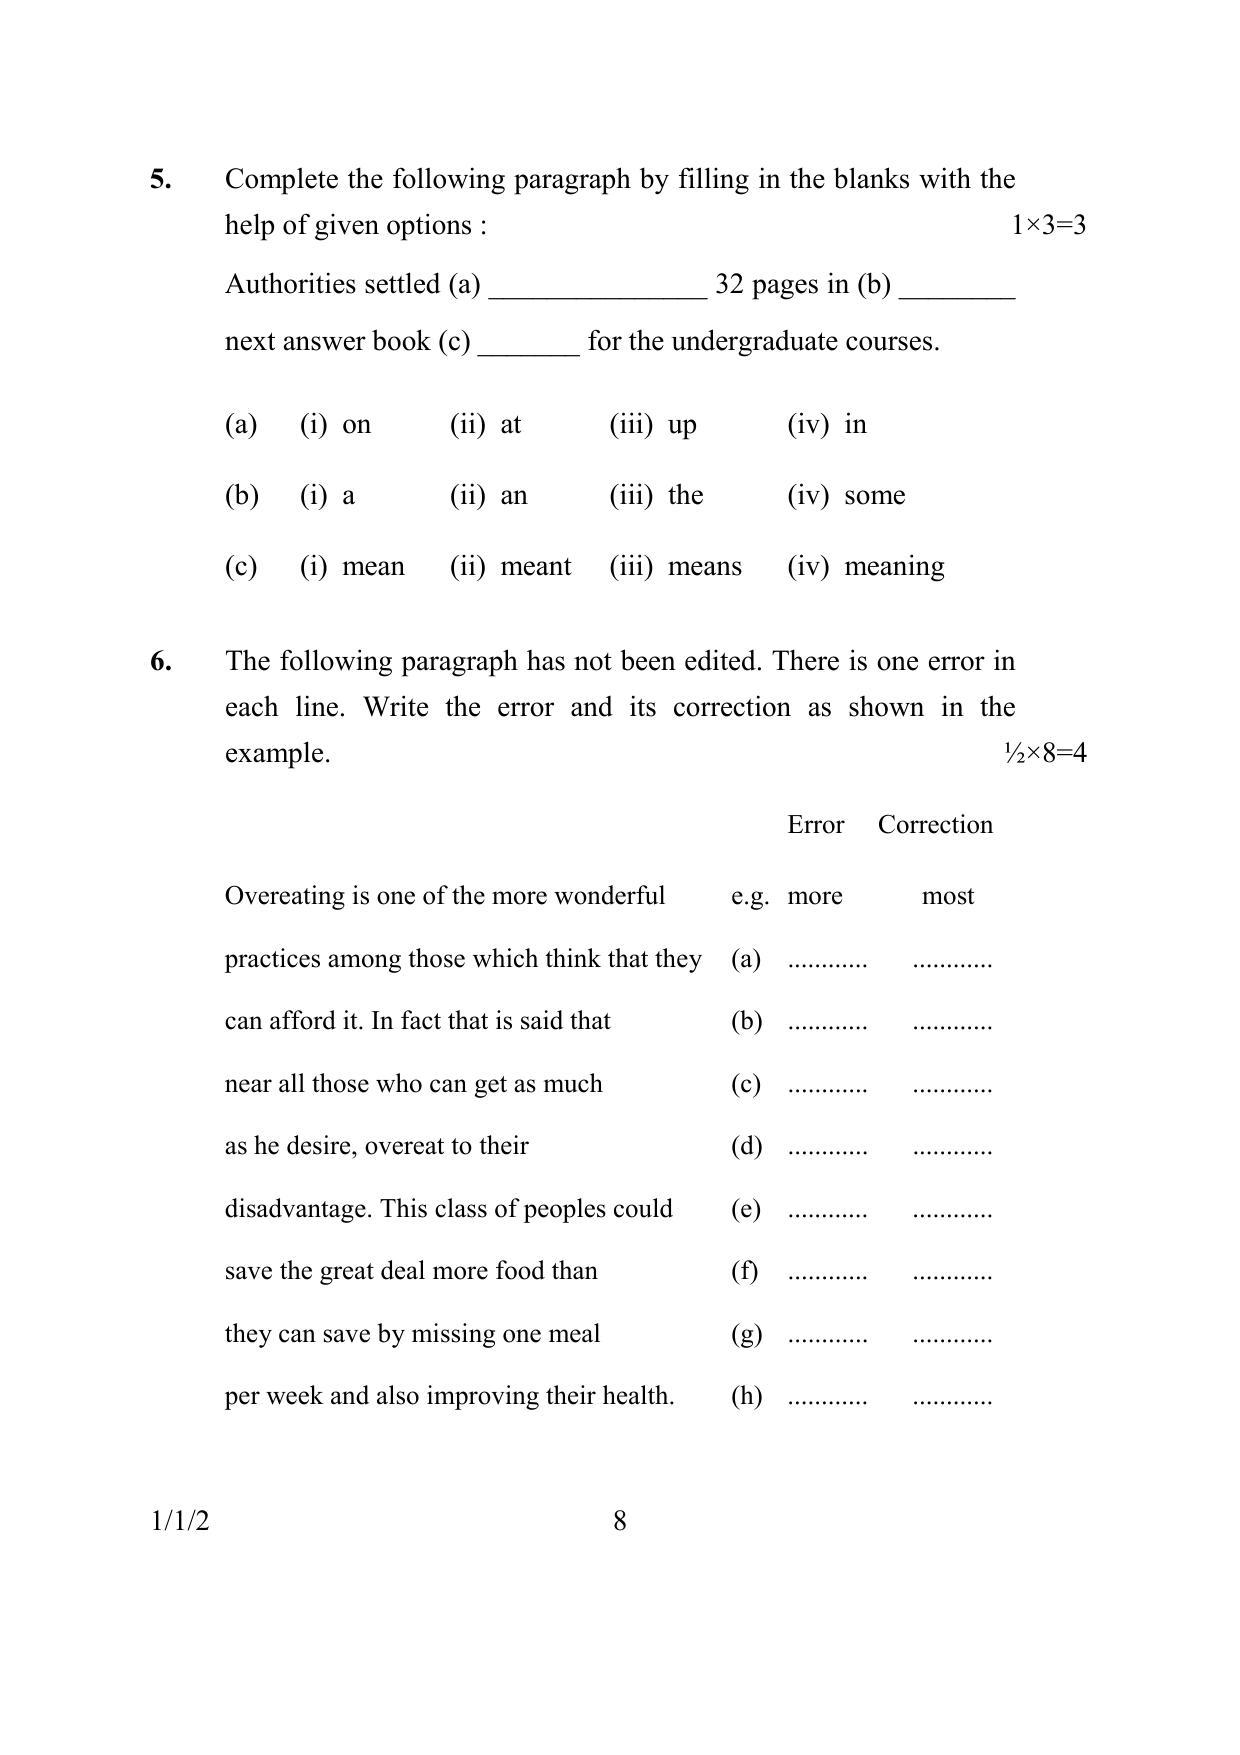 CBSE Class 10 1-1-2 ENGLISH COMMUNICATIVE 2016 Question Paper - Page 8